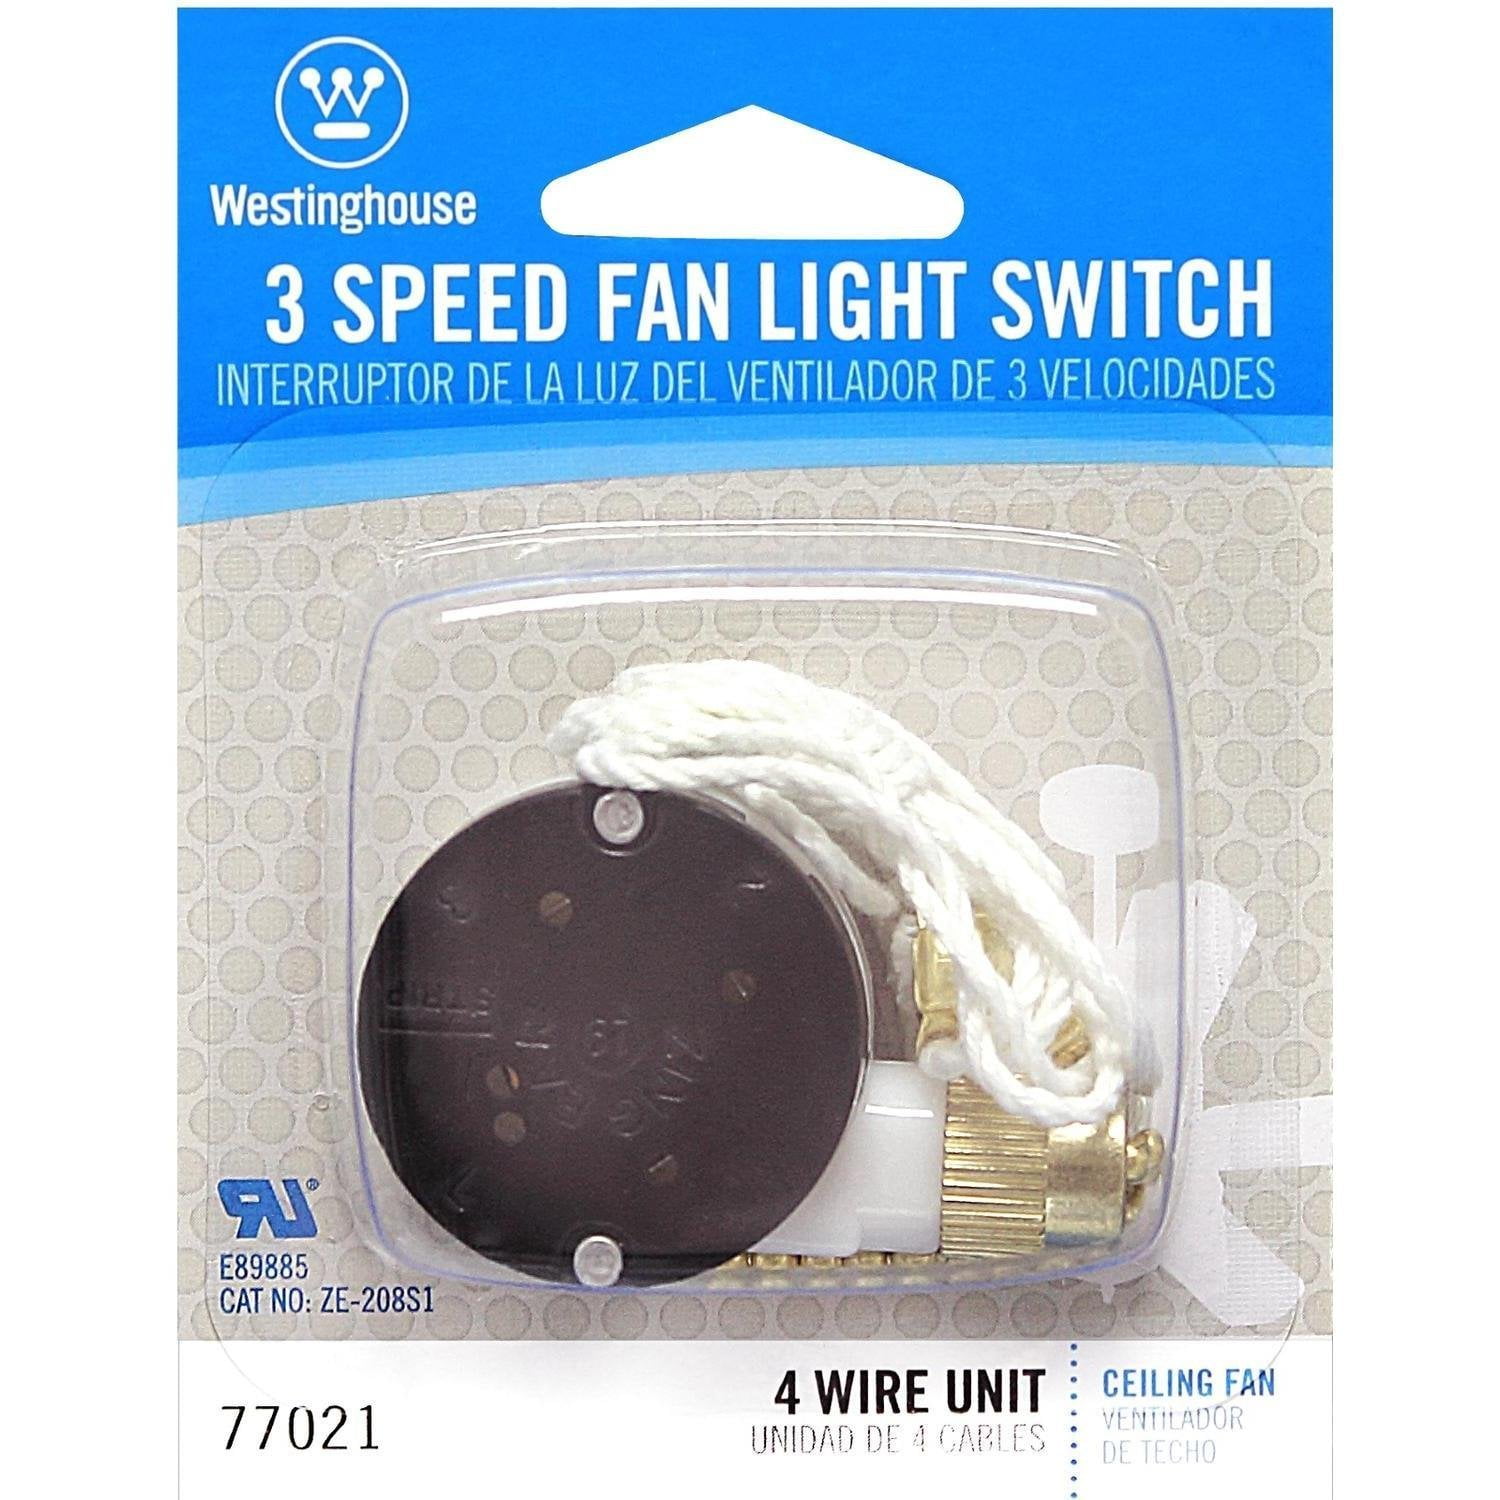 Westinghouse 7702100 3 Speed Fan Switch Limit One 1 Per Order